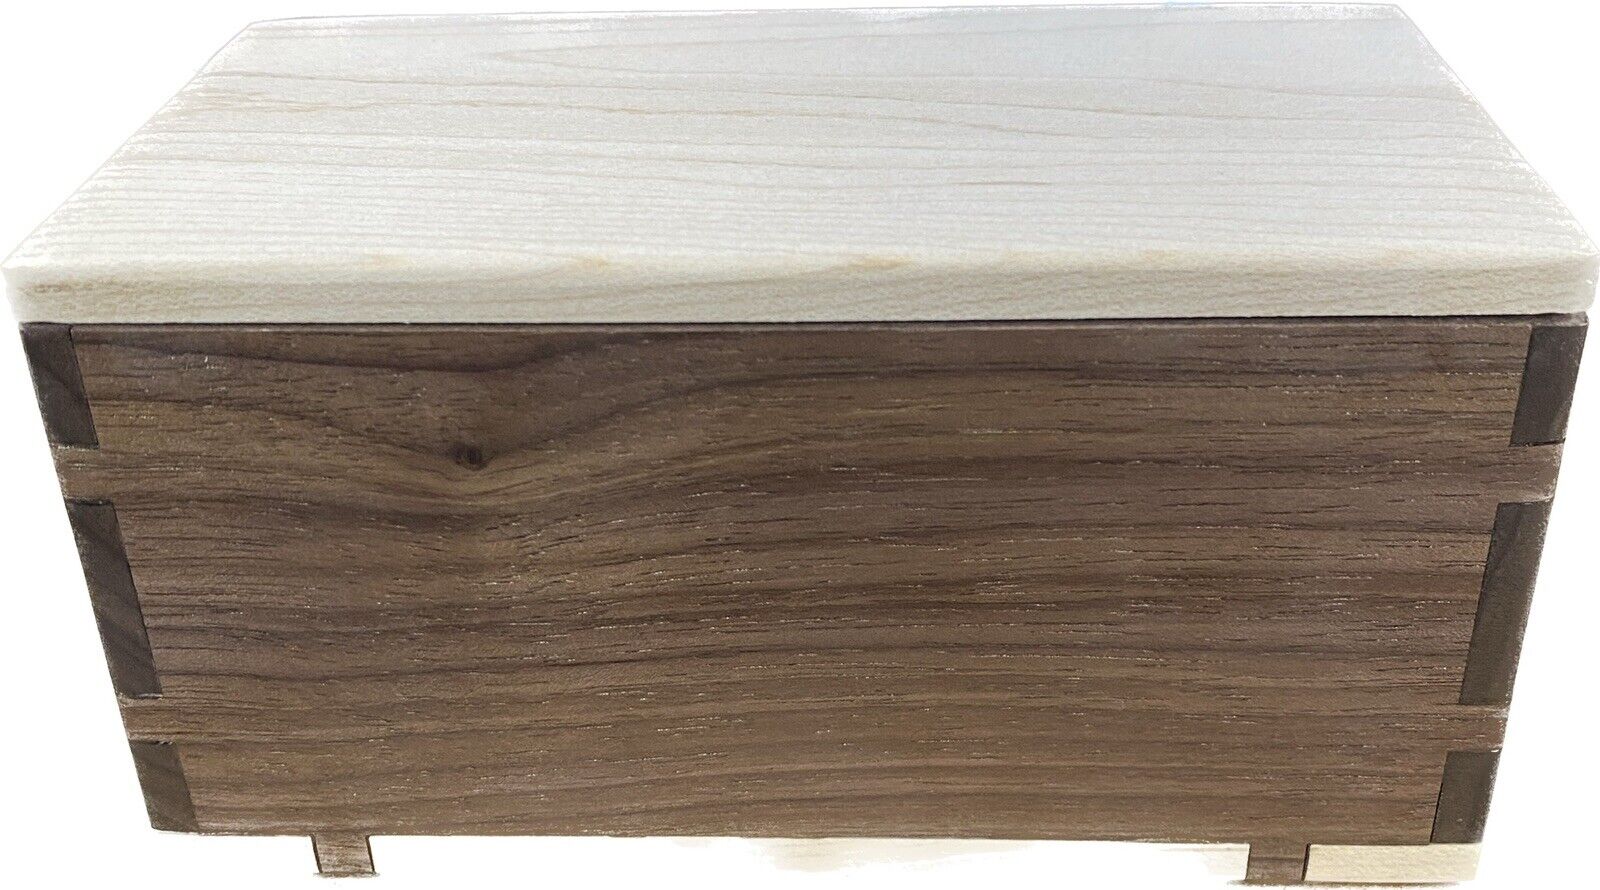 Personalized Wooden Keepsake Box